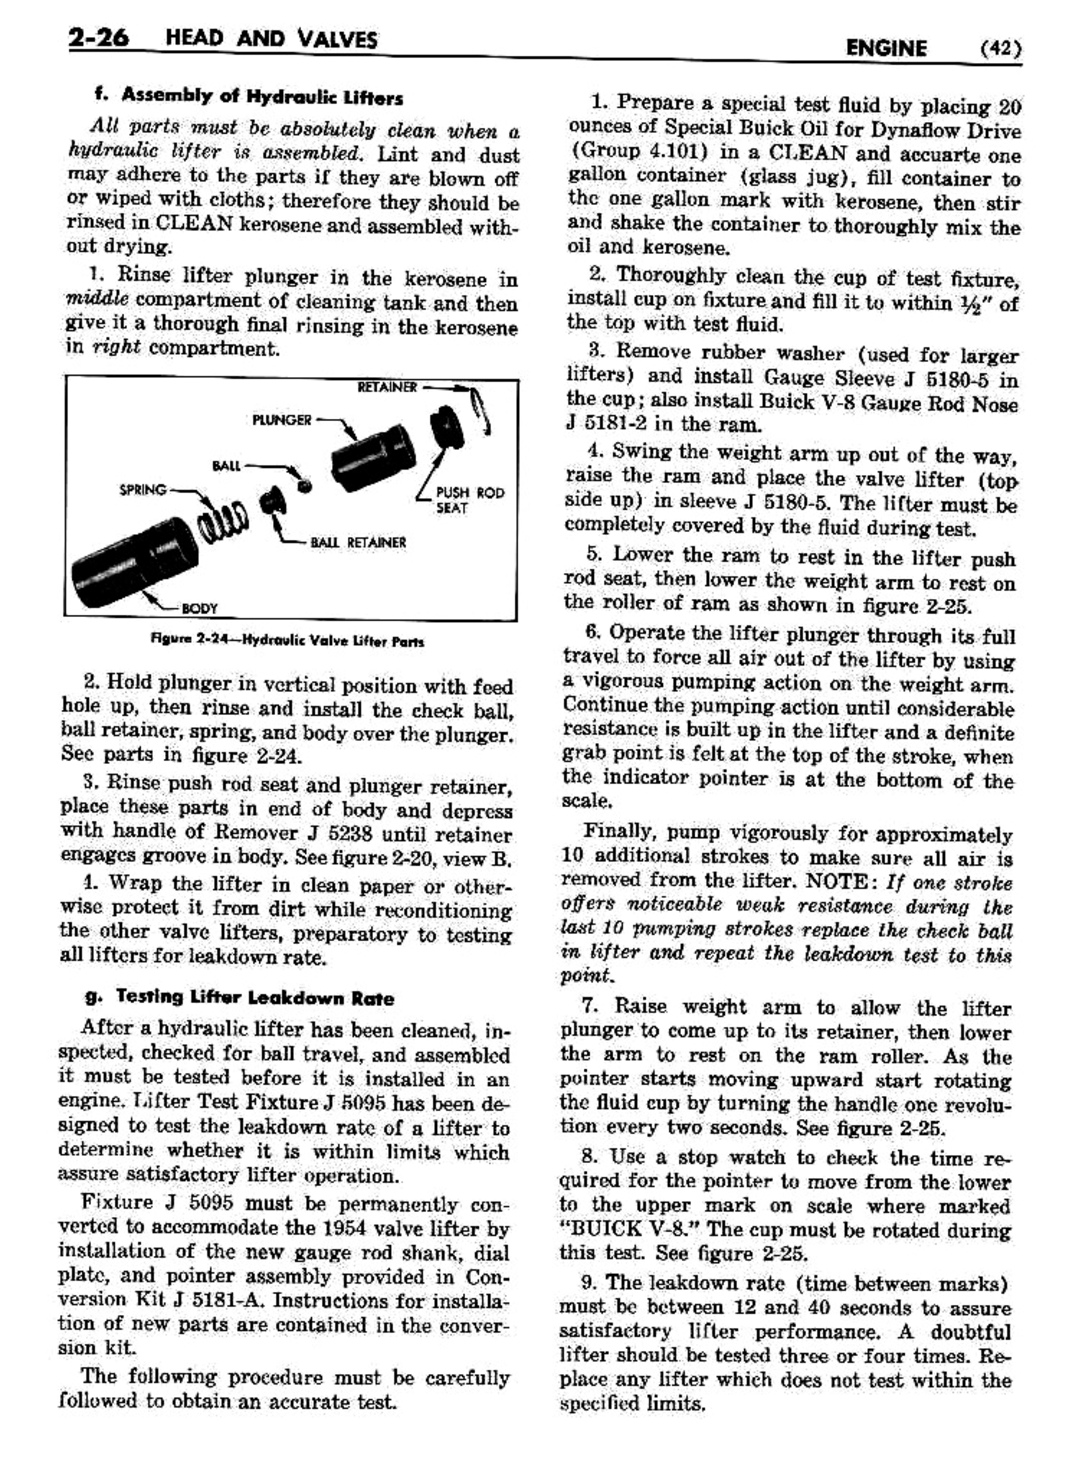 n_03 1954 Buick Shop Manual - Engine-026-026.jpg